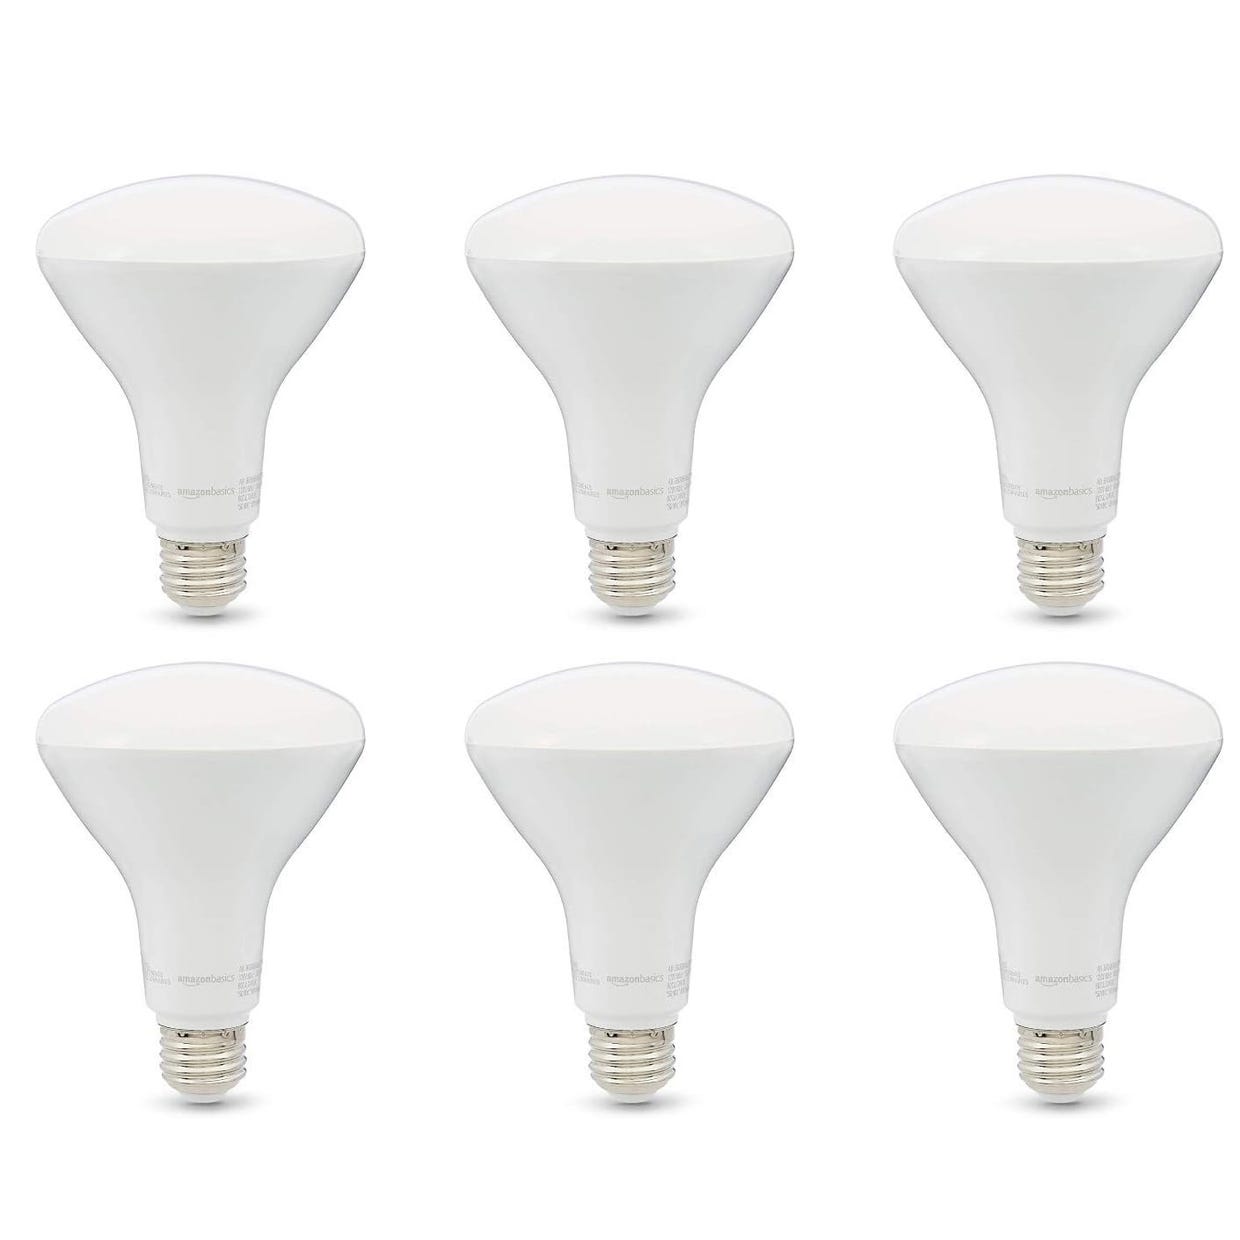 Six white LED light bulbs with a br30 shape and standard screw base.